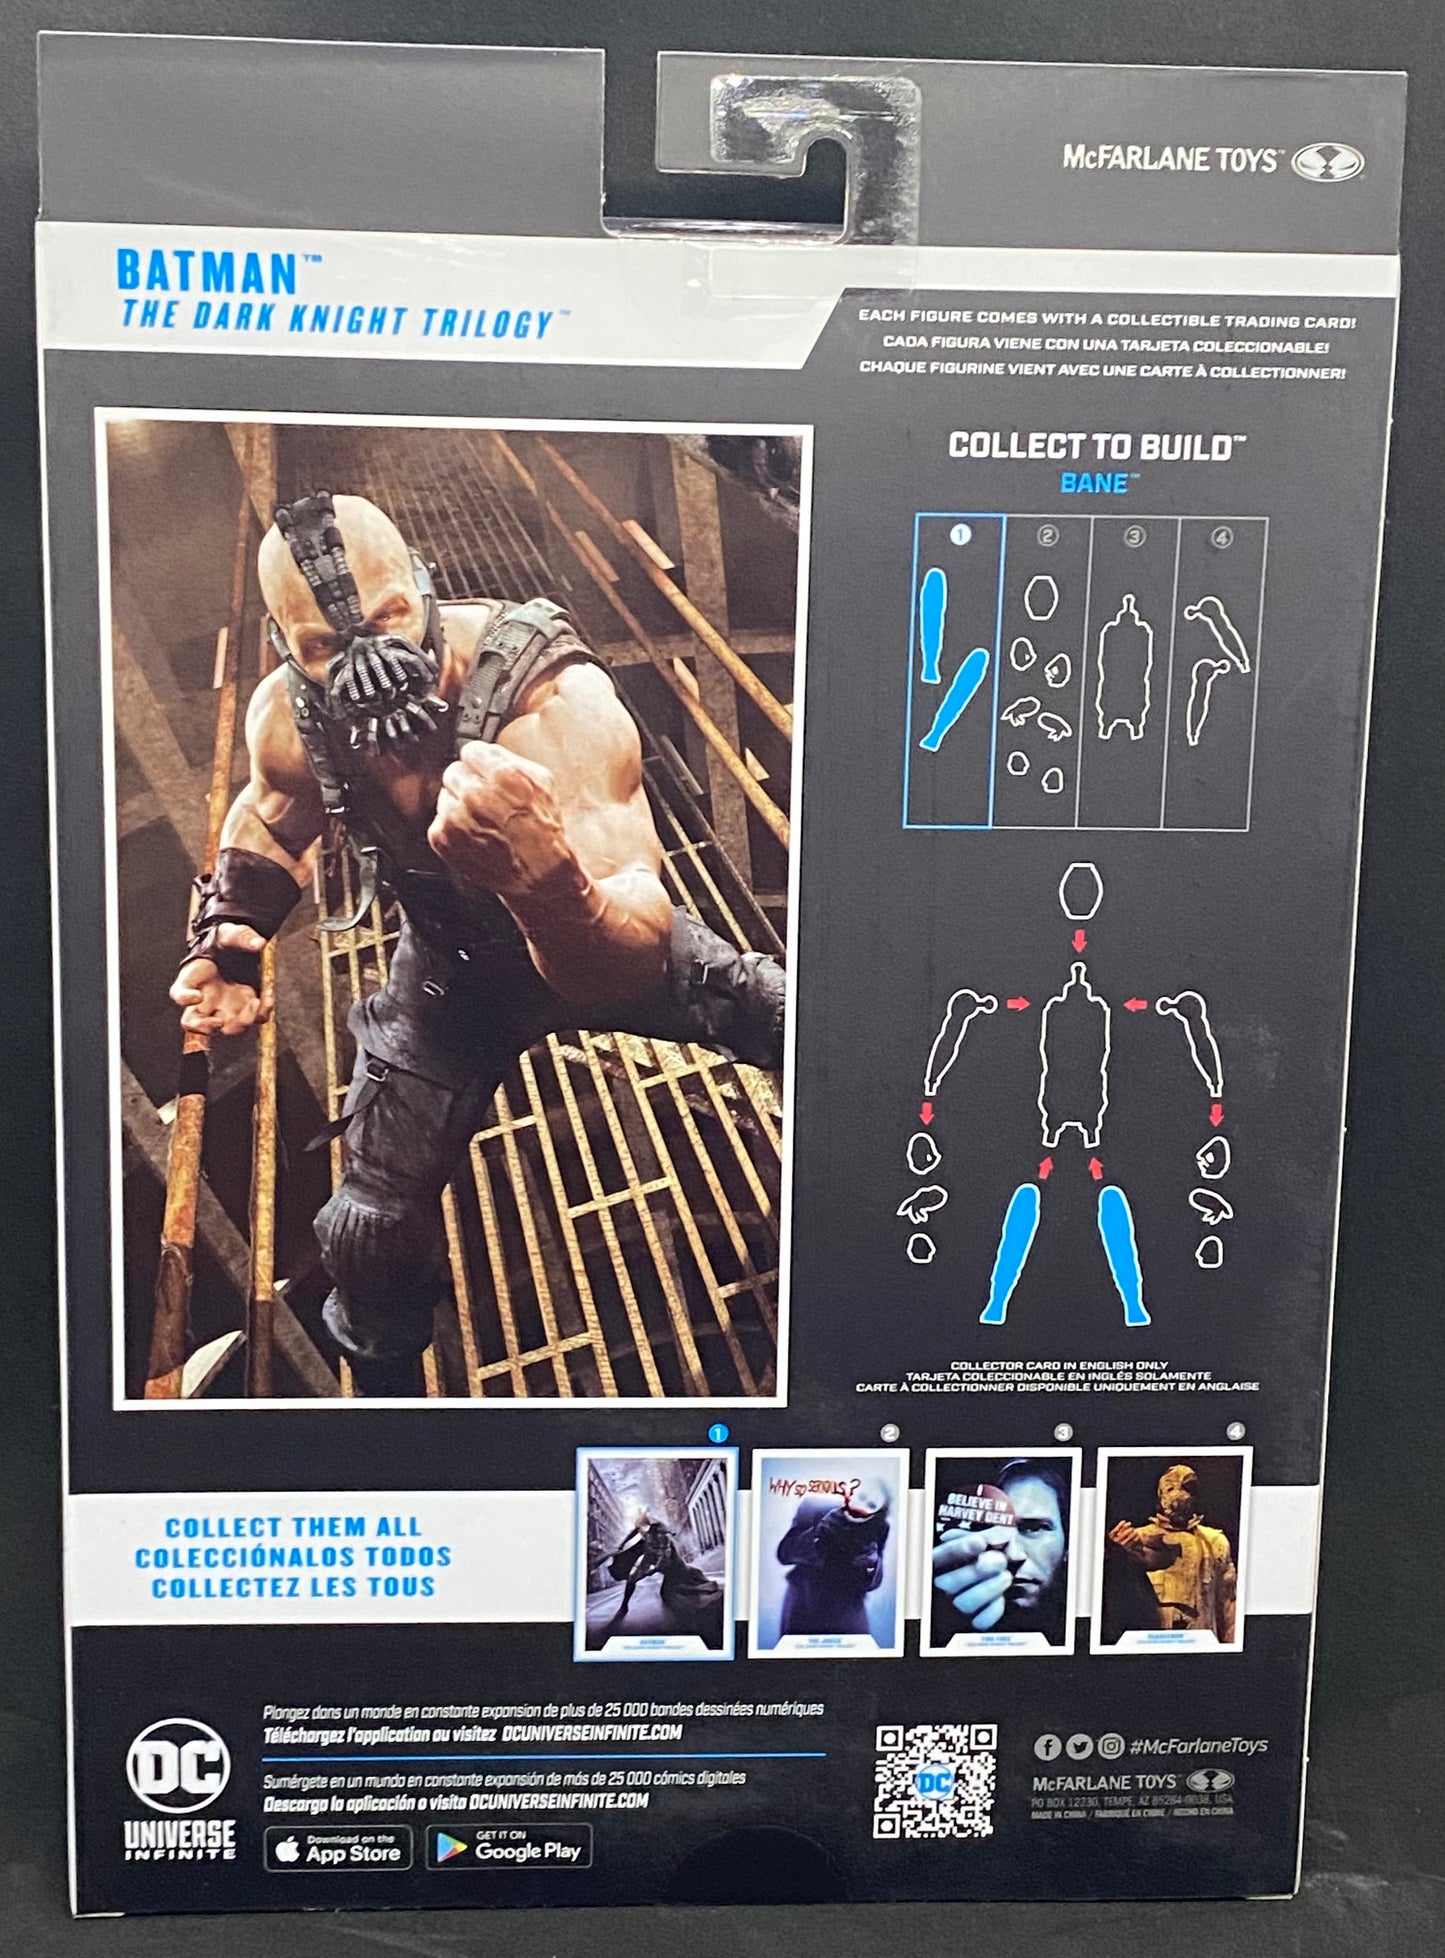 DC Multiverse Dark Knight 7 Inch Action Figure BAF Bane - Batman